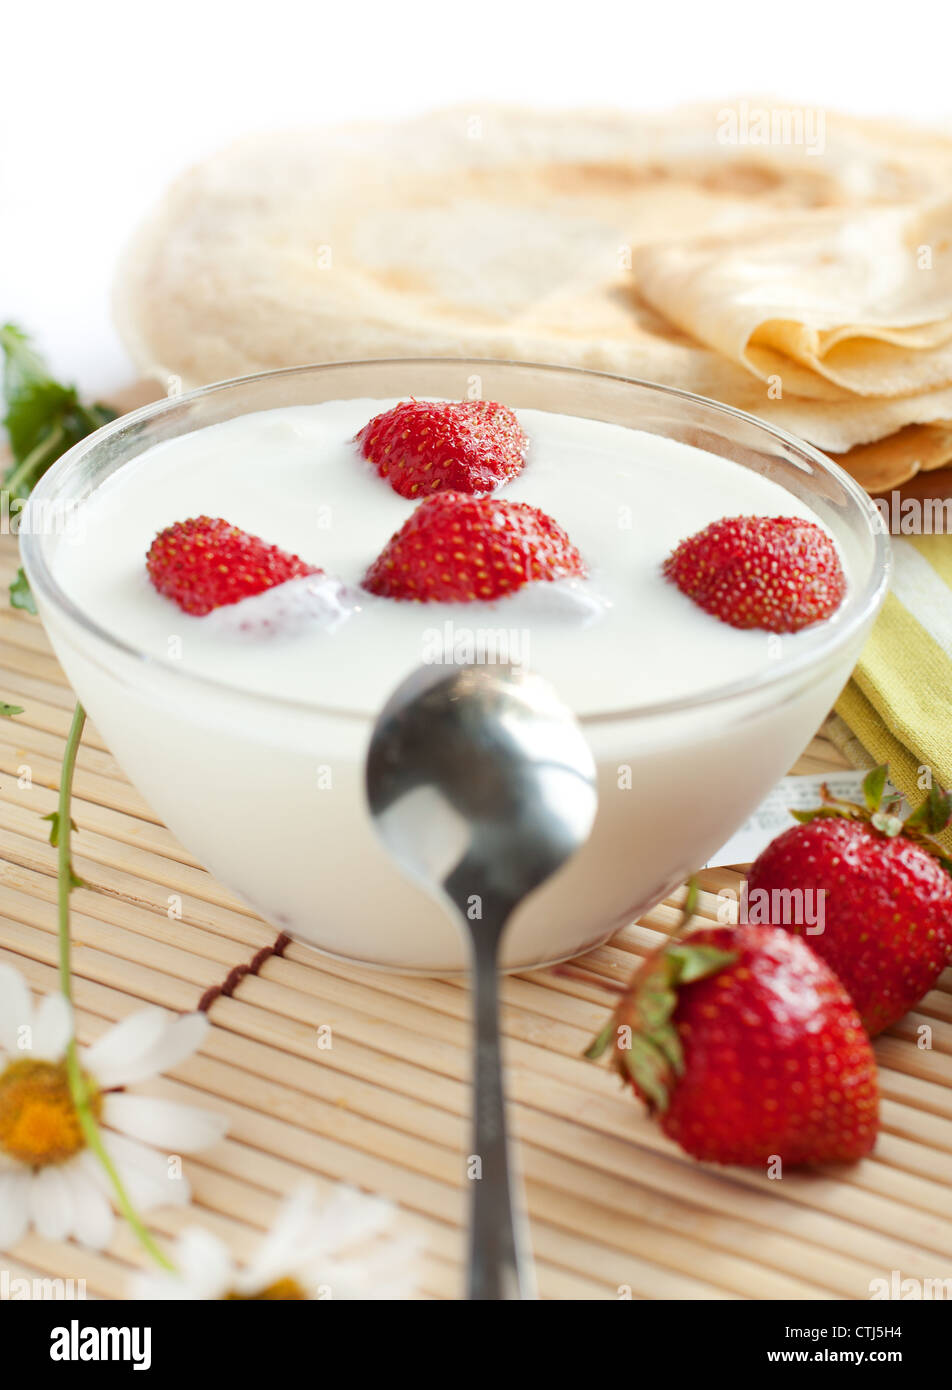 Yogurt with strawberries and flavored pancakes, closeup Stock Photo